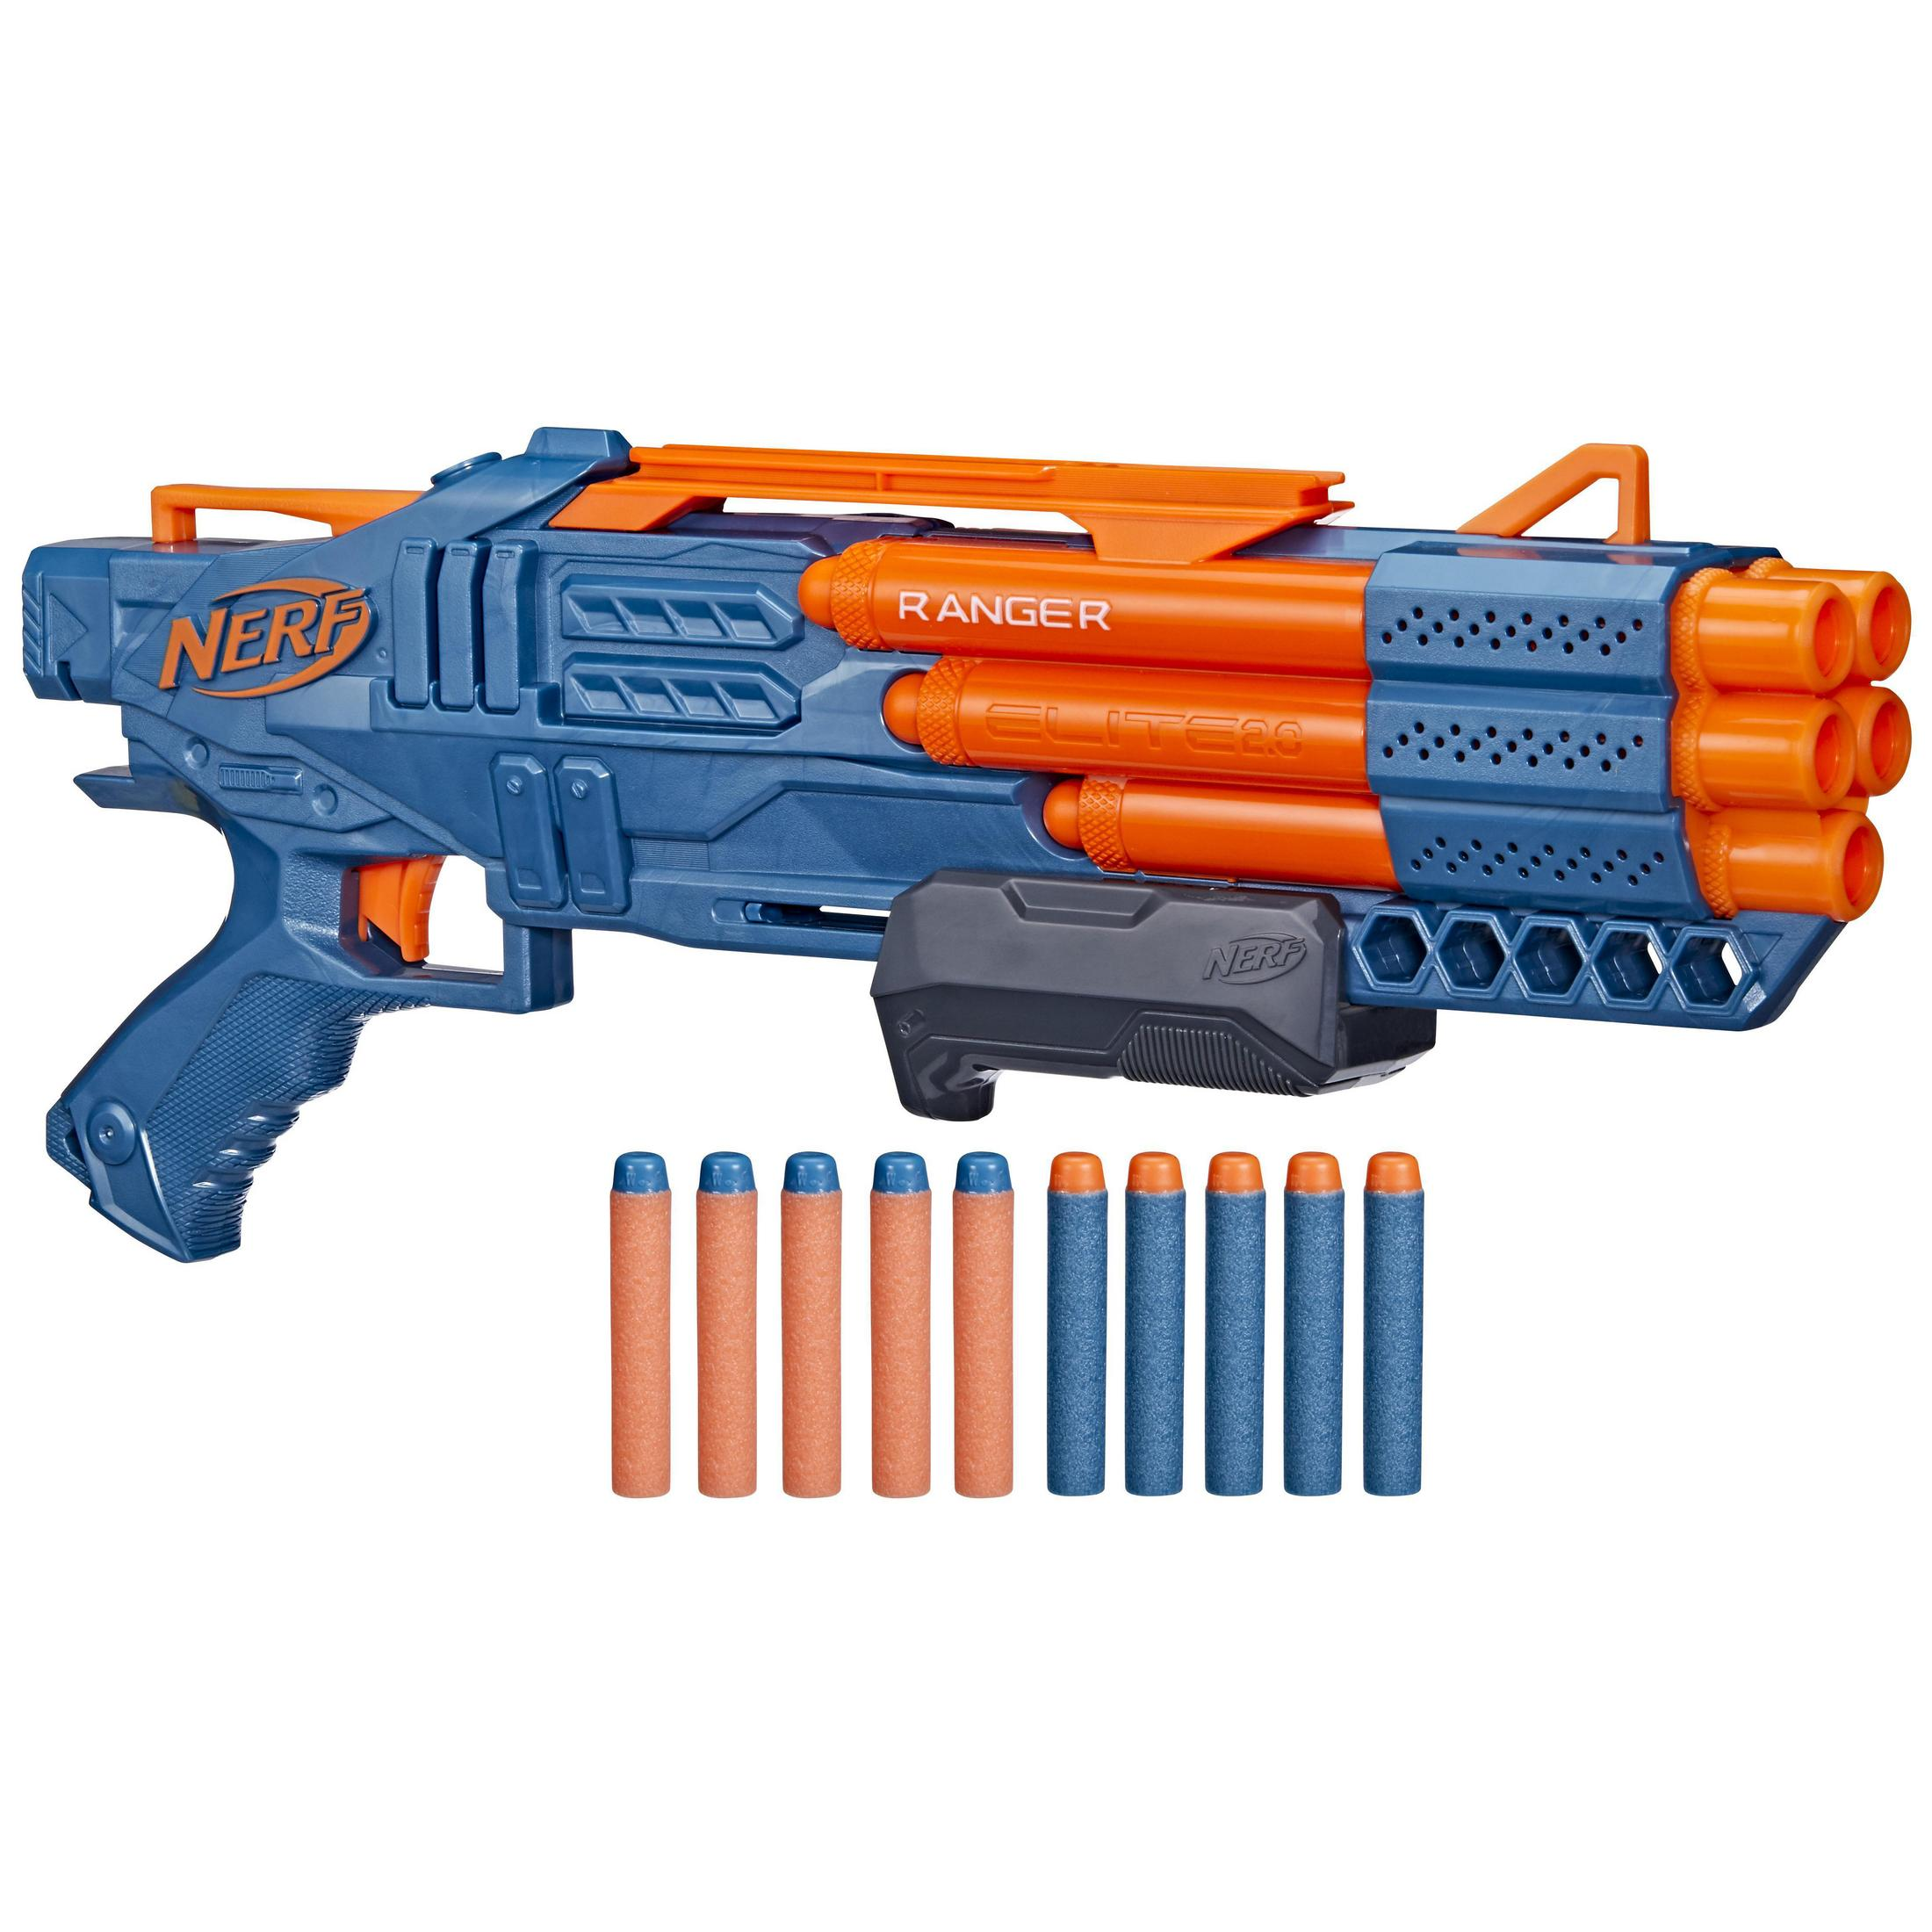 NERF Nerf ELITE 2.0 Ranger Spielzeugwaffe PD Keine Angabe 5